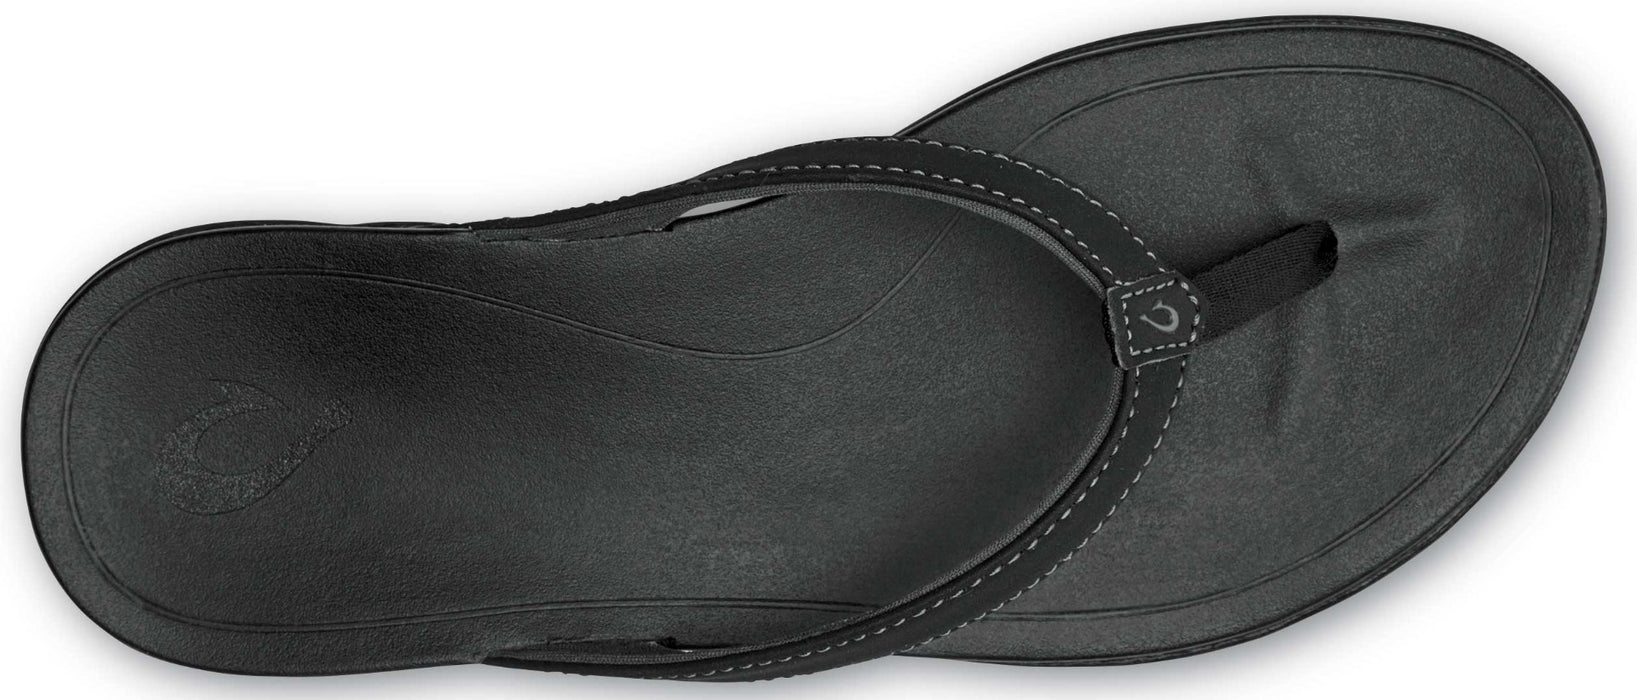 OluKai Ladies' Ho'opio Beach Sandals 2021